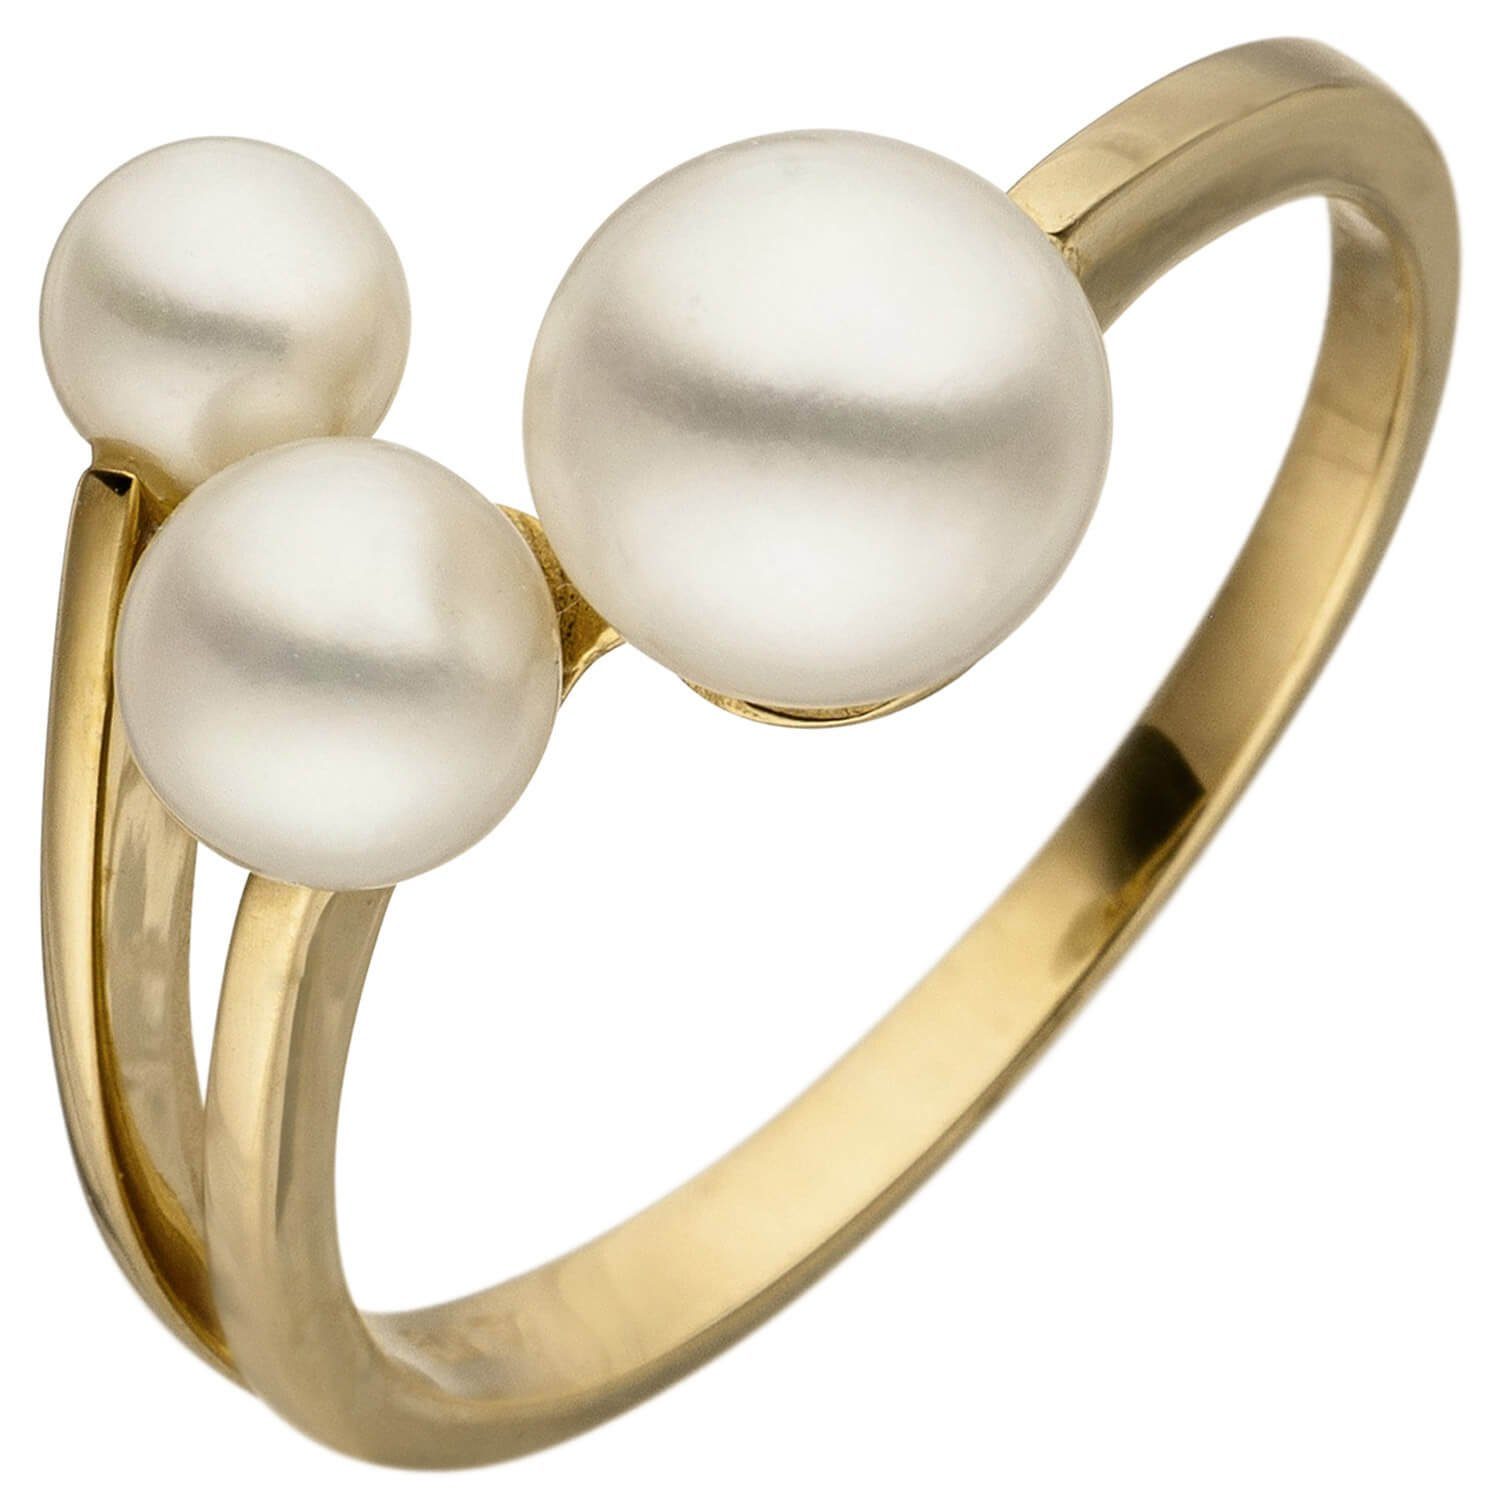 Schmuck Krone Fingerring Ring Damenring mit 3 Süßwasser Perlen 585 Gold Gelbgold Fingerring Damen, Gold 585